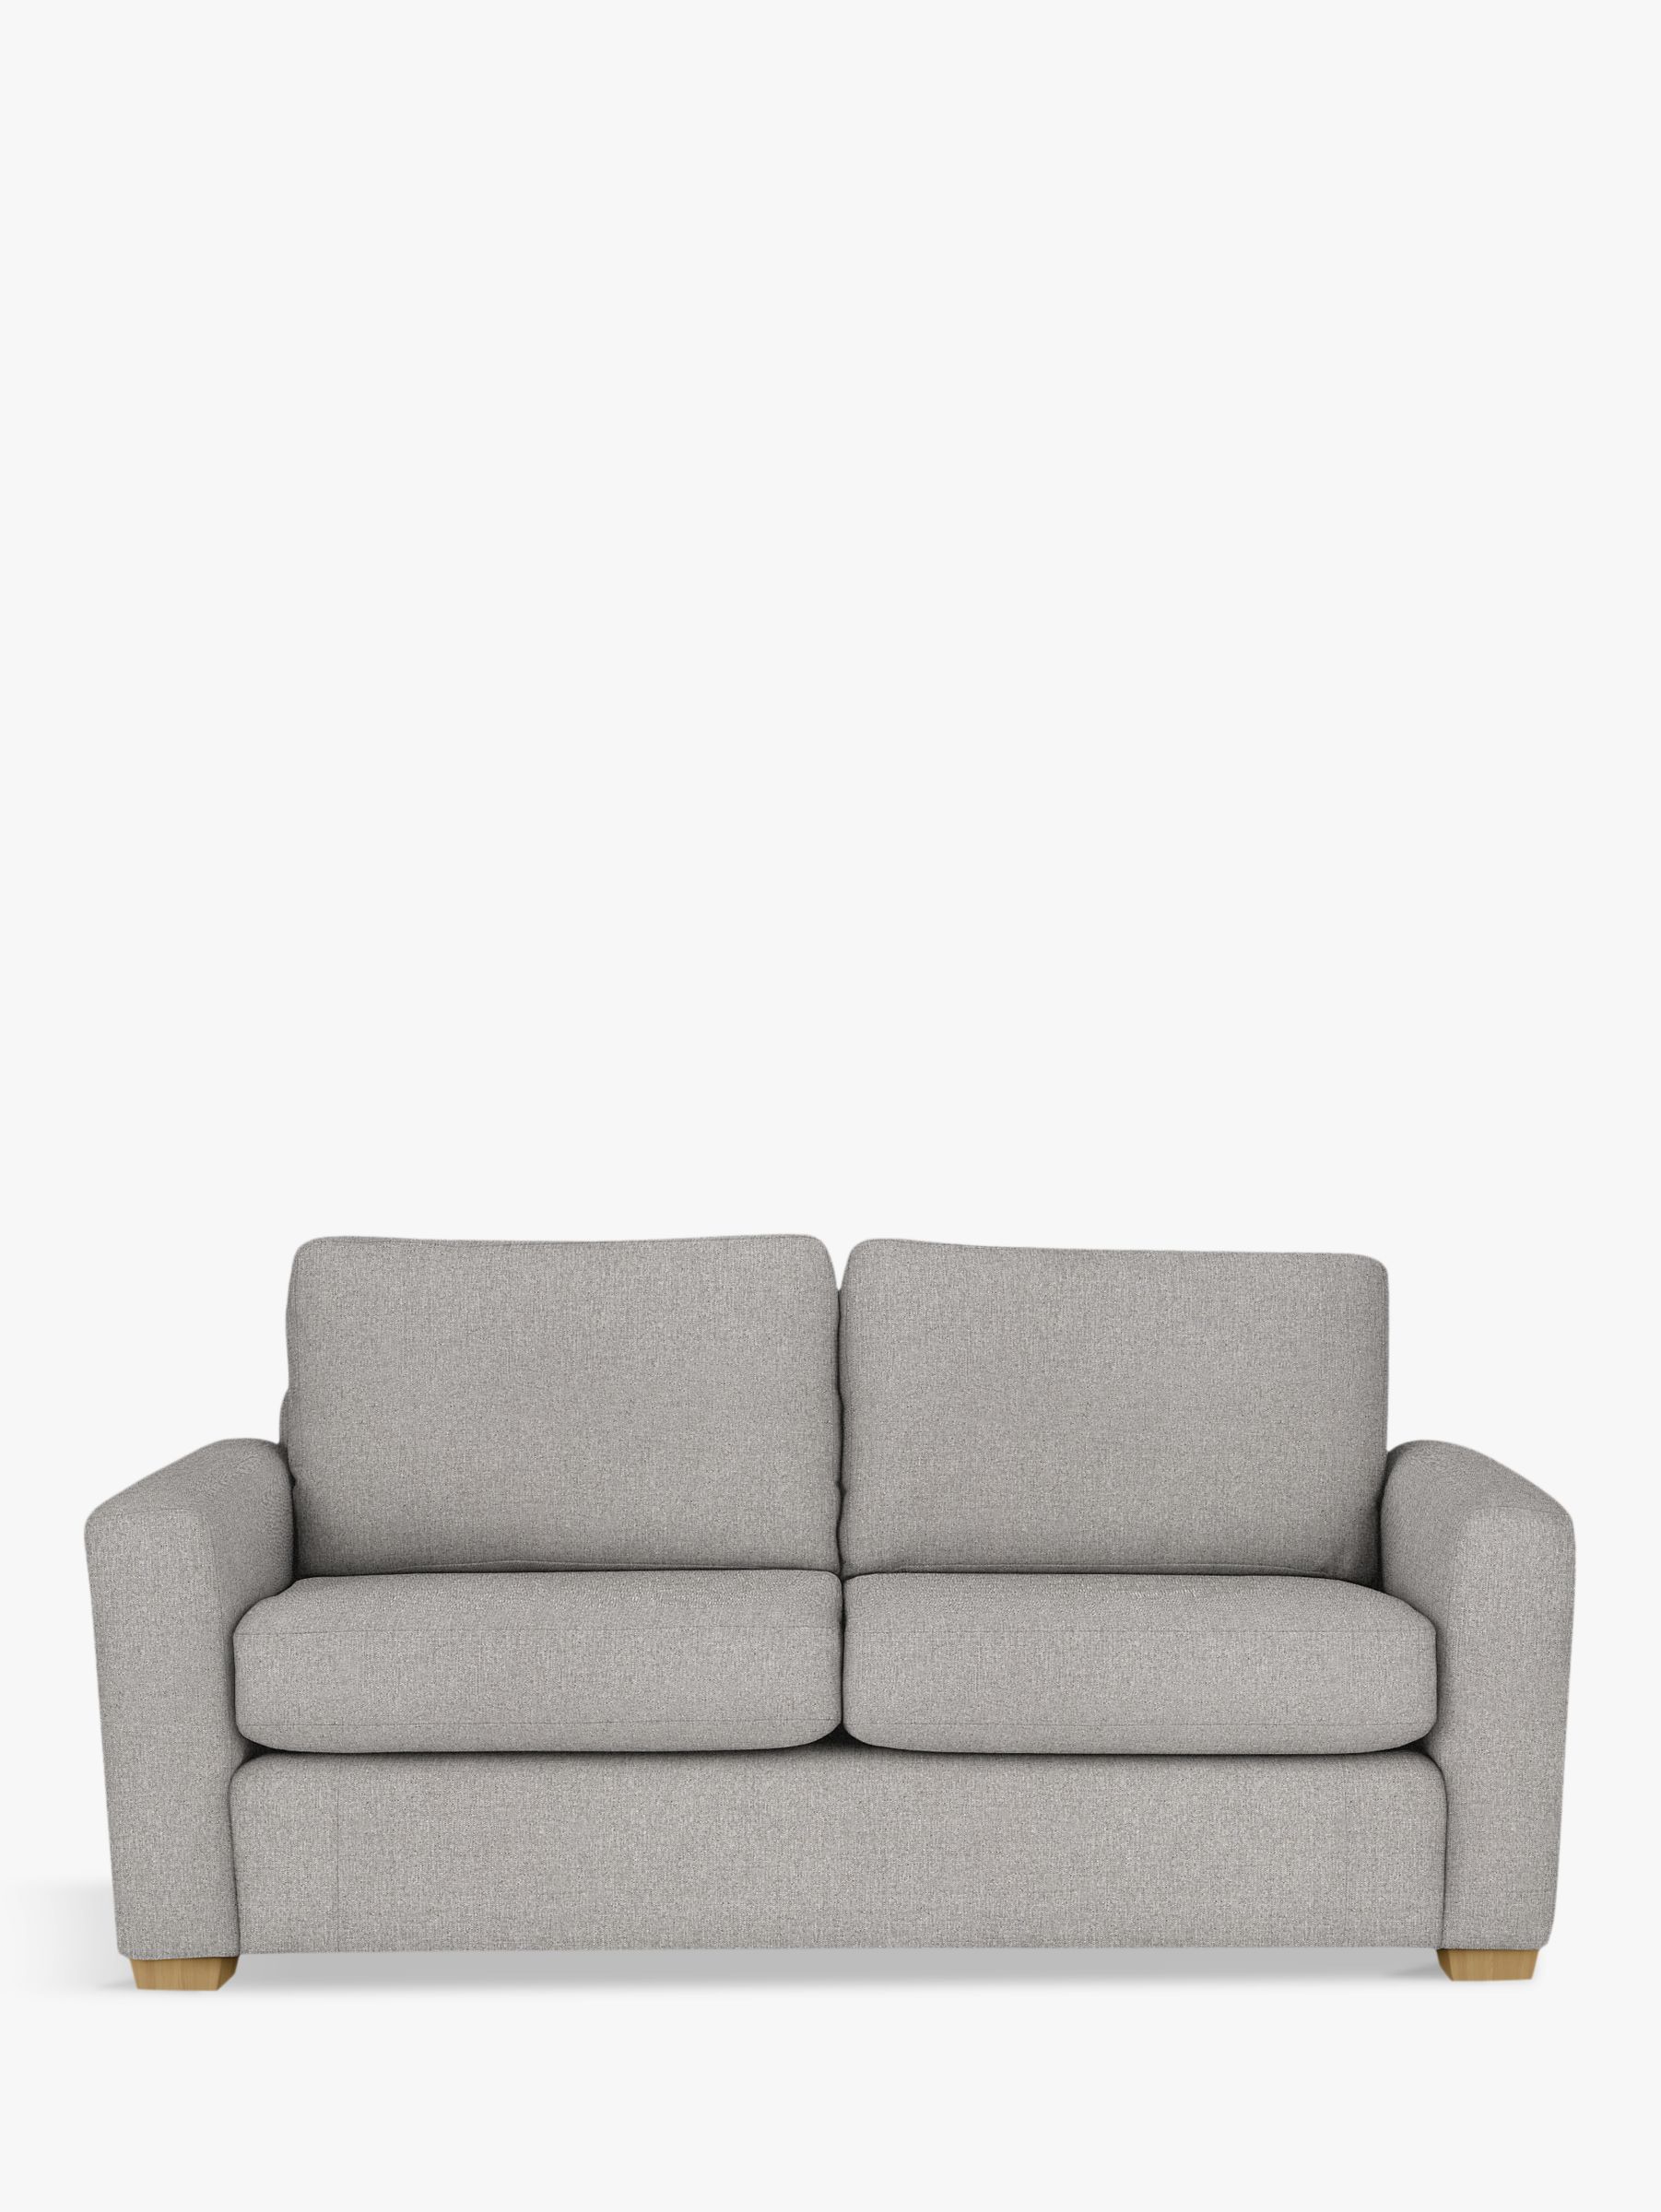 John Lewis Oliver Medium 2 Seater Sofa, Light Leg, Aquaclean Matilda Steel